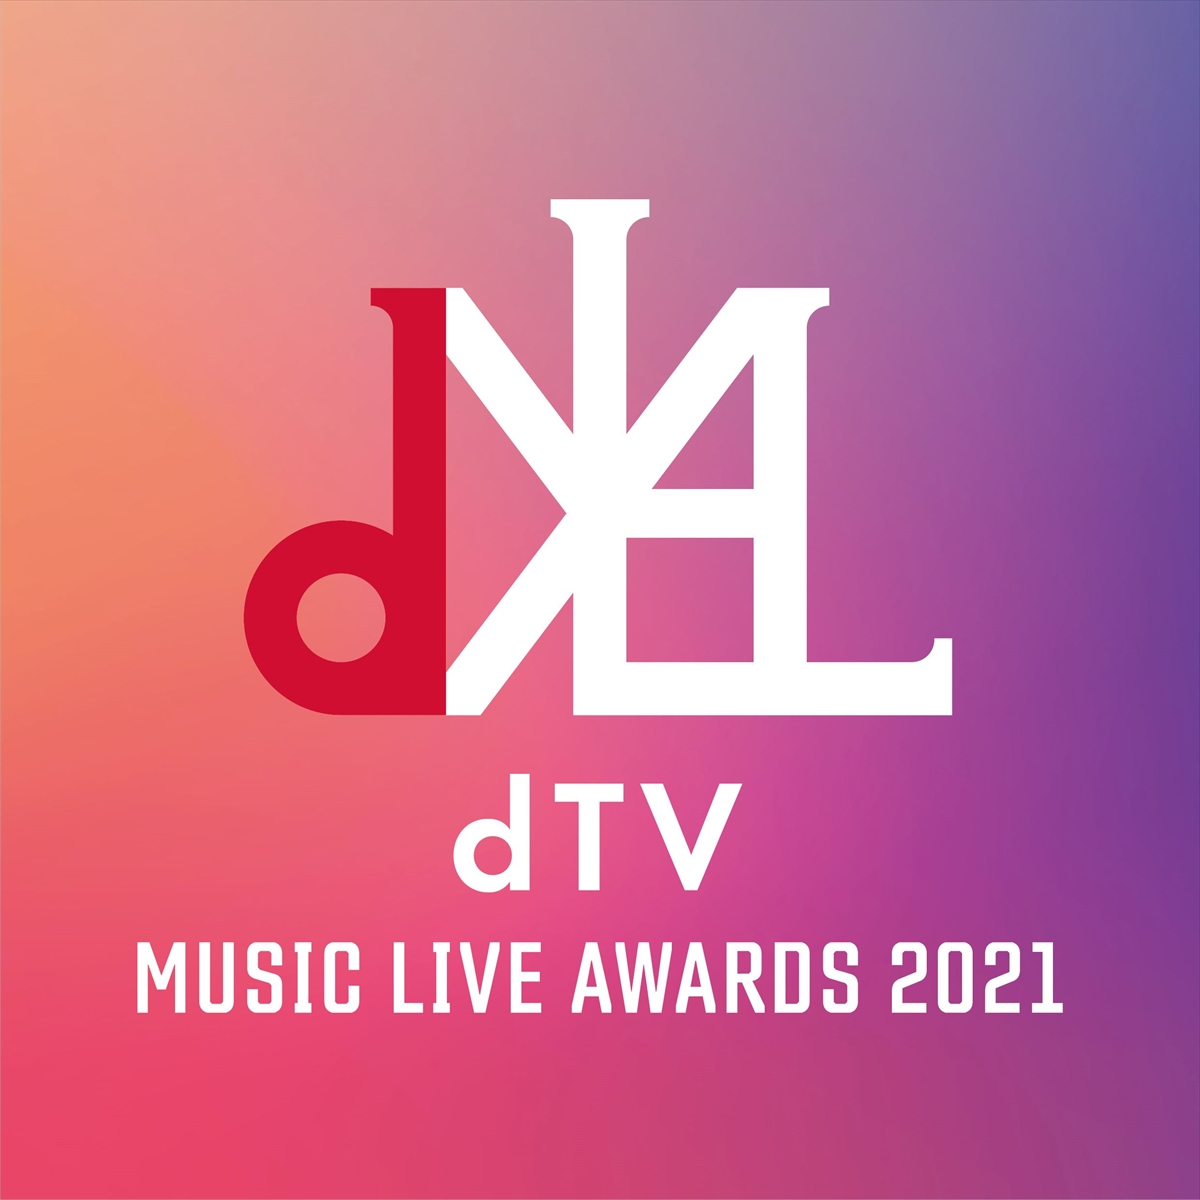 『dTV MUSIC LIVE AWARDS 2021』